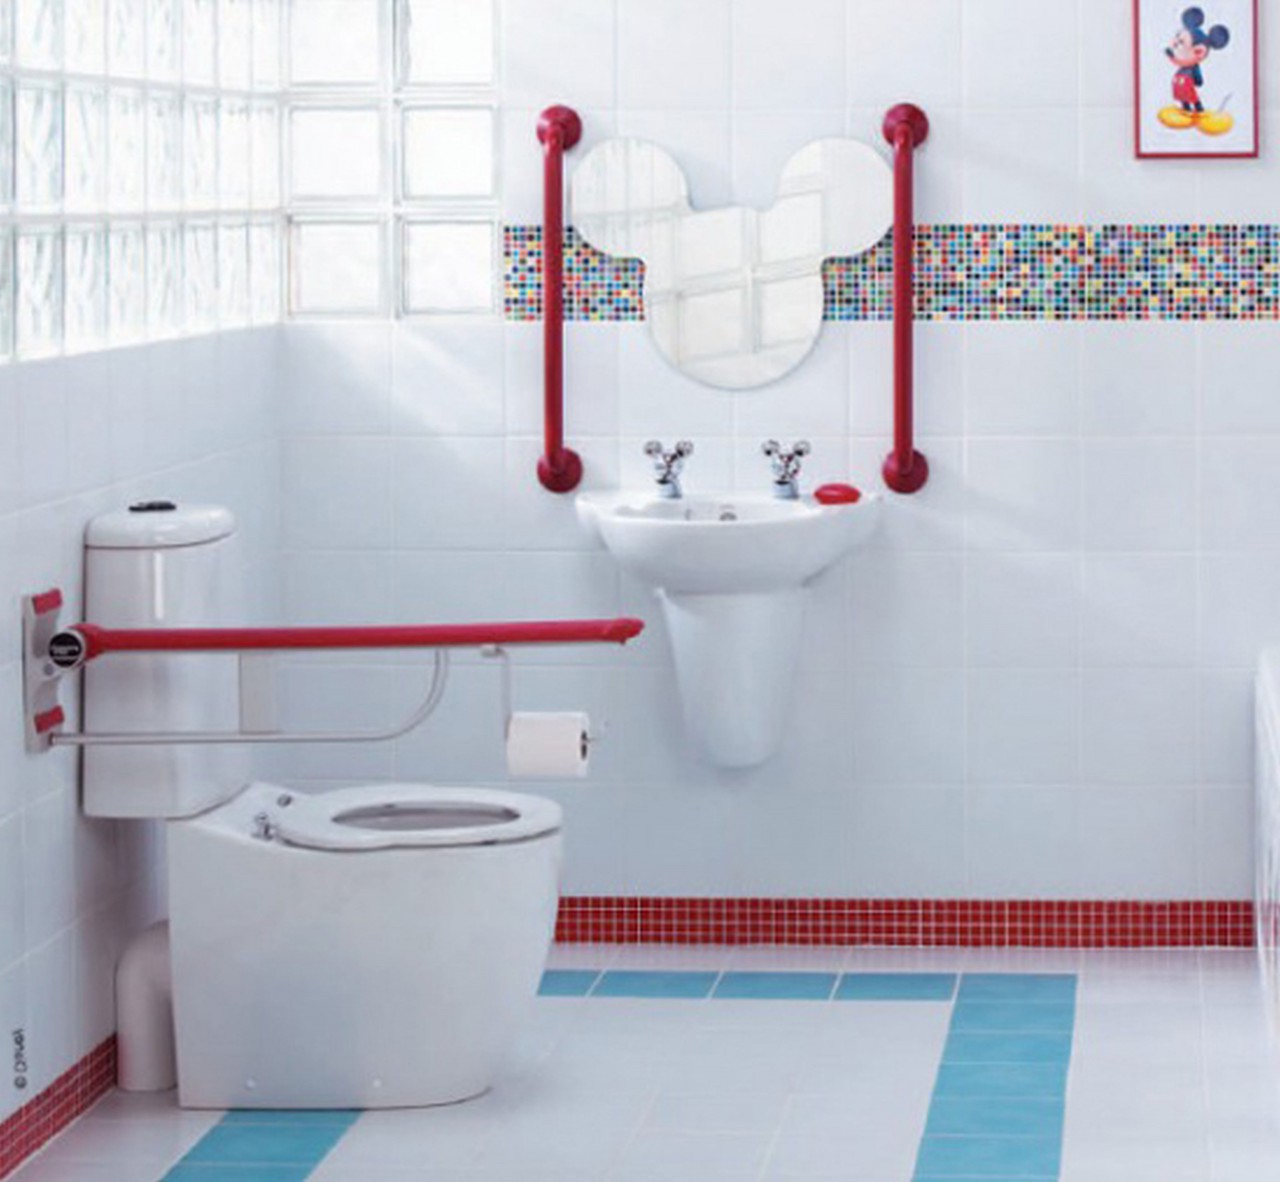 1950s-blue-bathroom-tile-cool-ideas-on-bathroom-design-ideas